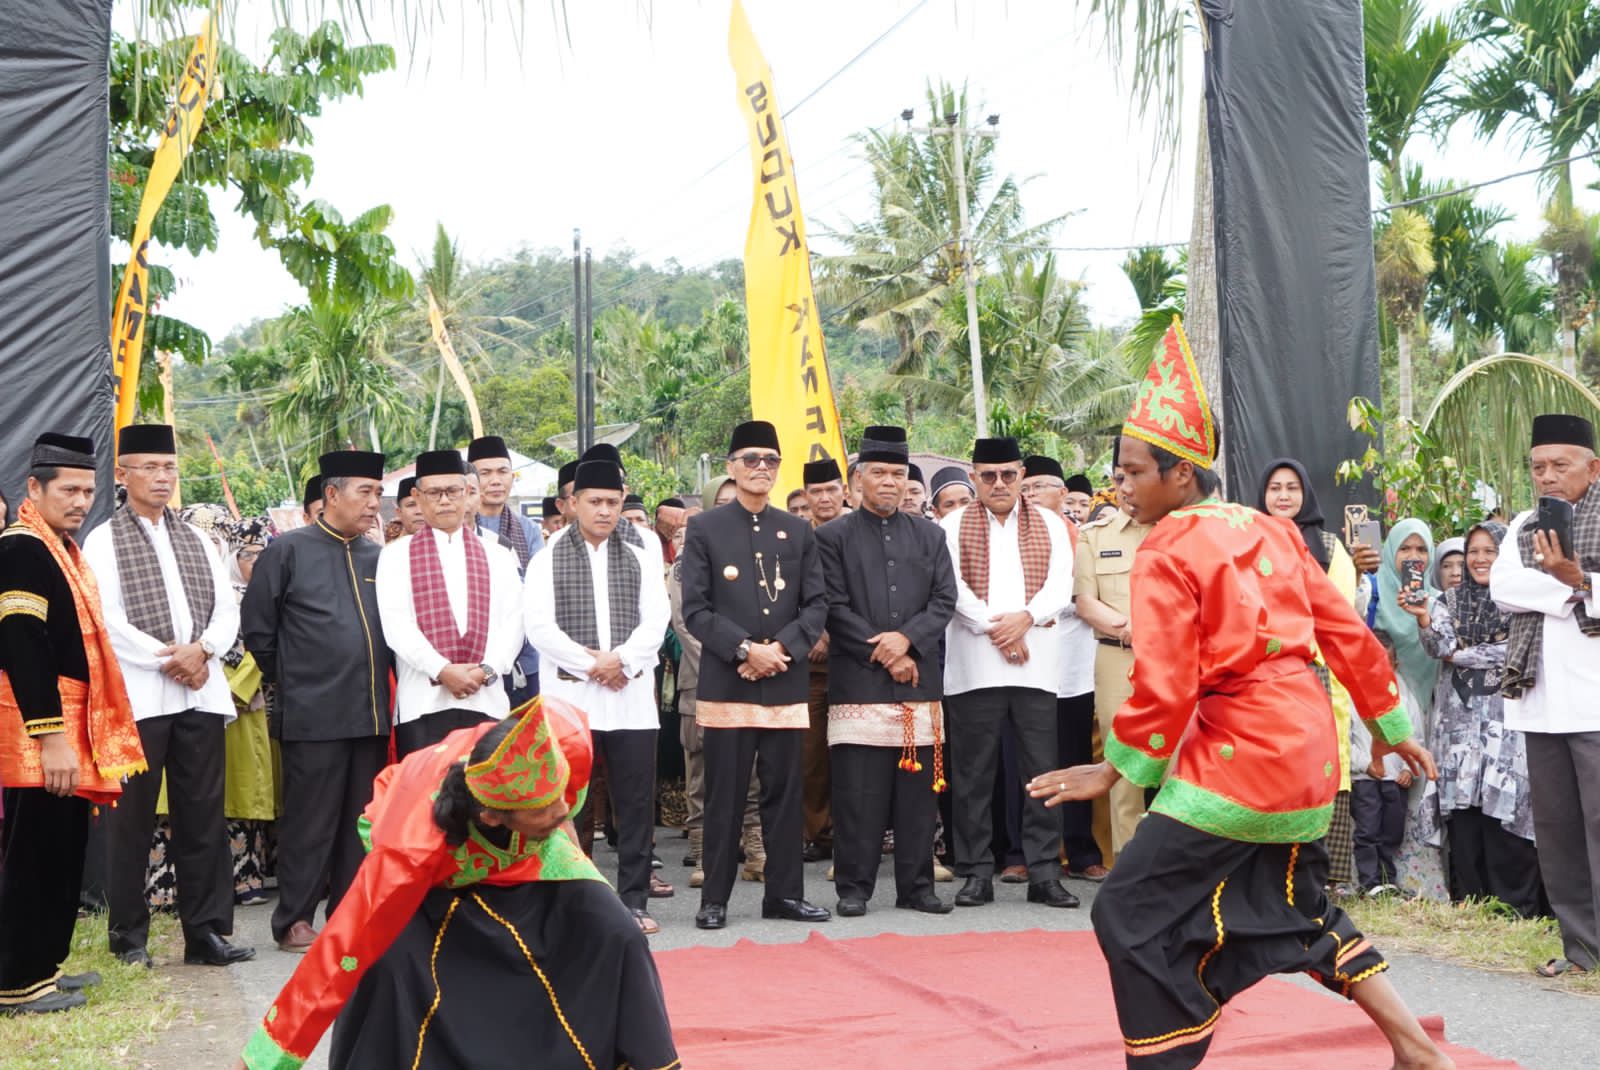 Pasukuan Salo Pitopang Talang Maua Batagak Pangulu, Ketua DPRD Limapuluh Kota Bergelar Dt.Rajo Simarajo